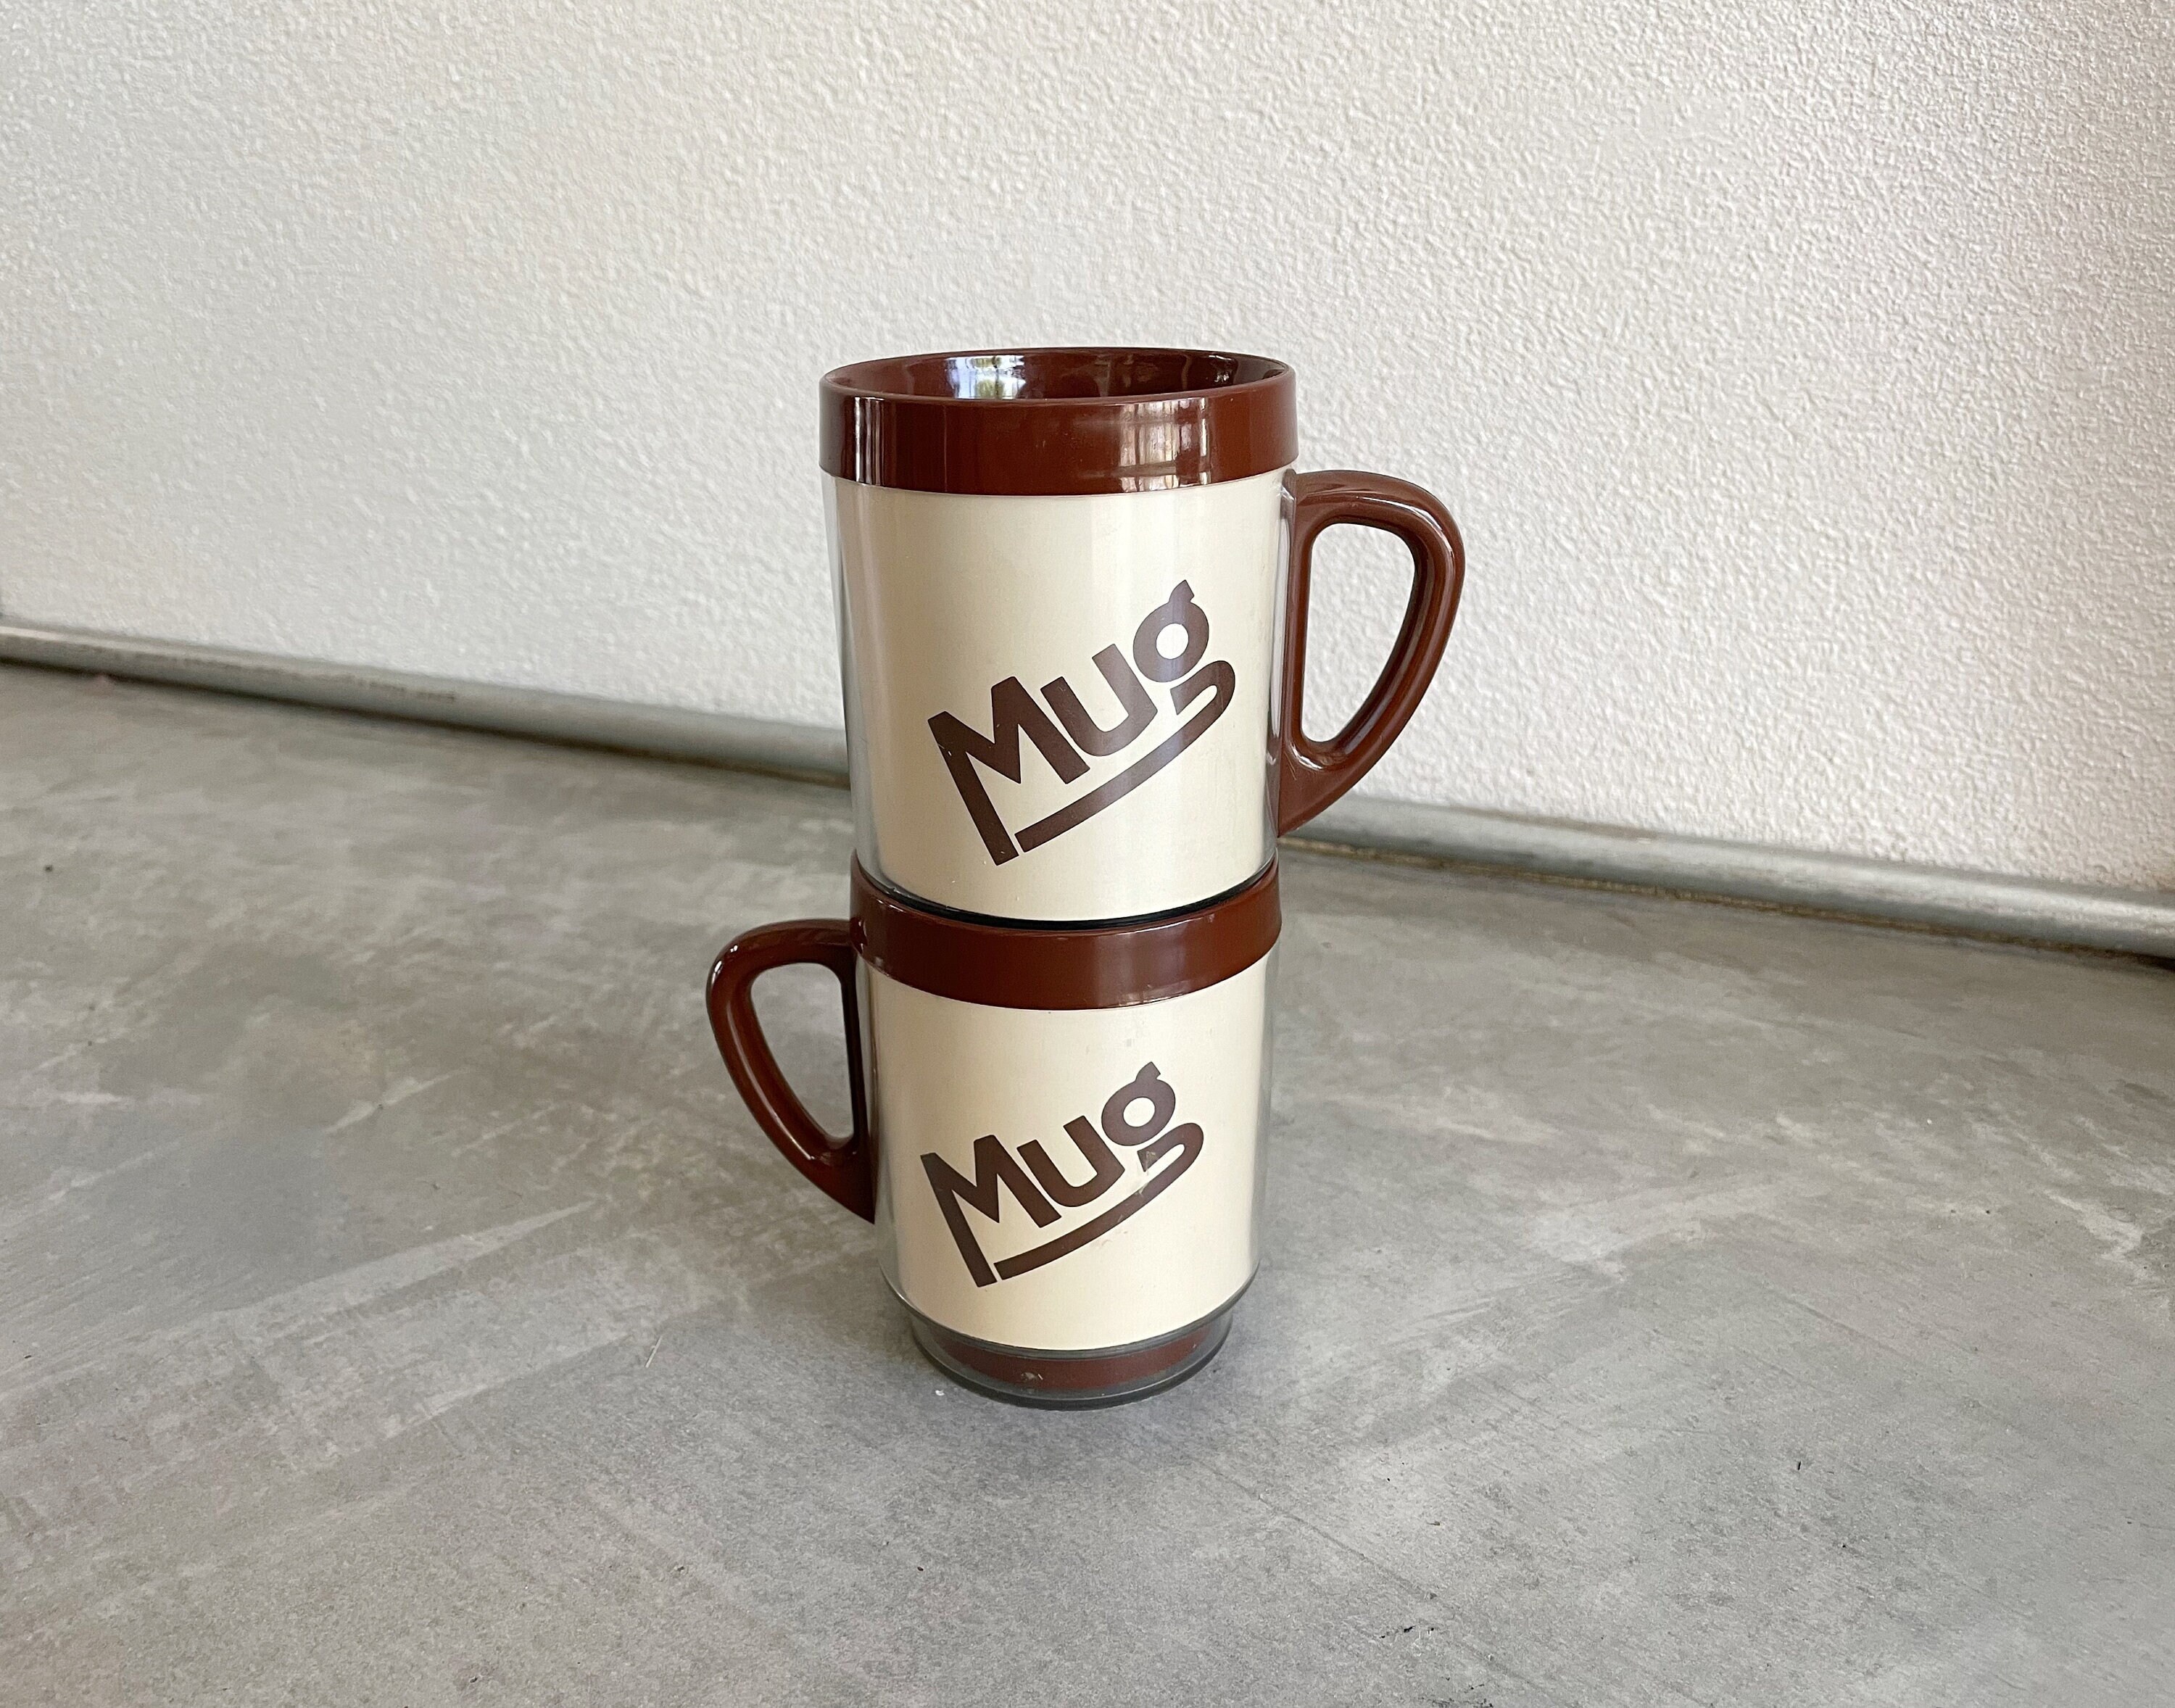 Two 12 oz Insulated Coffee Mugs like the Classic Aladdin Mugs by Thermo  Serv (blue)